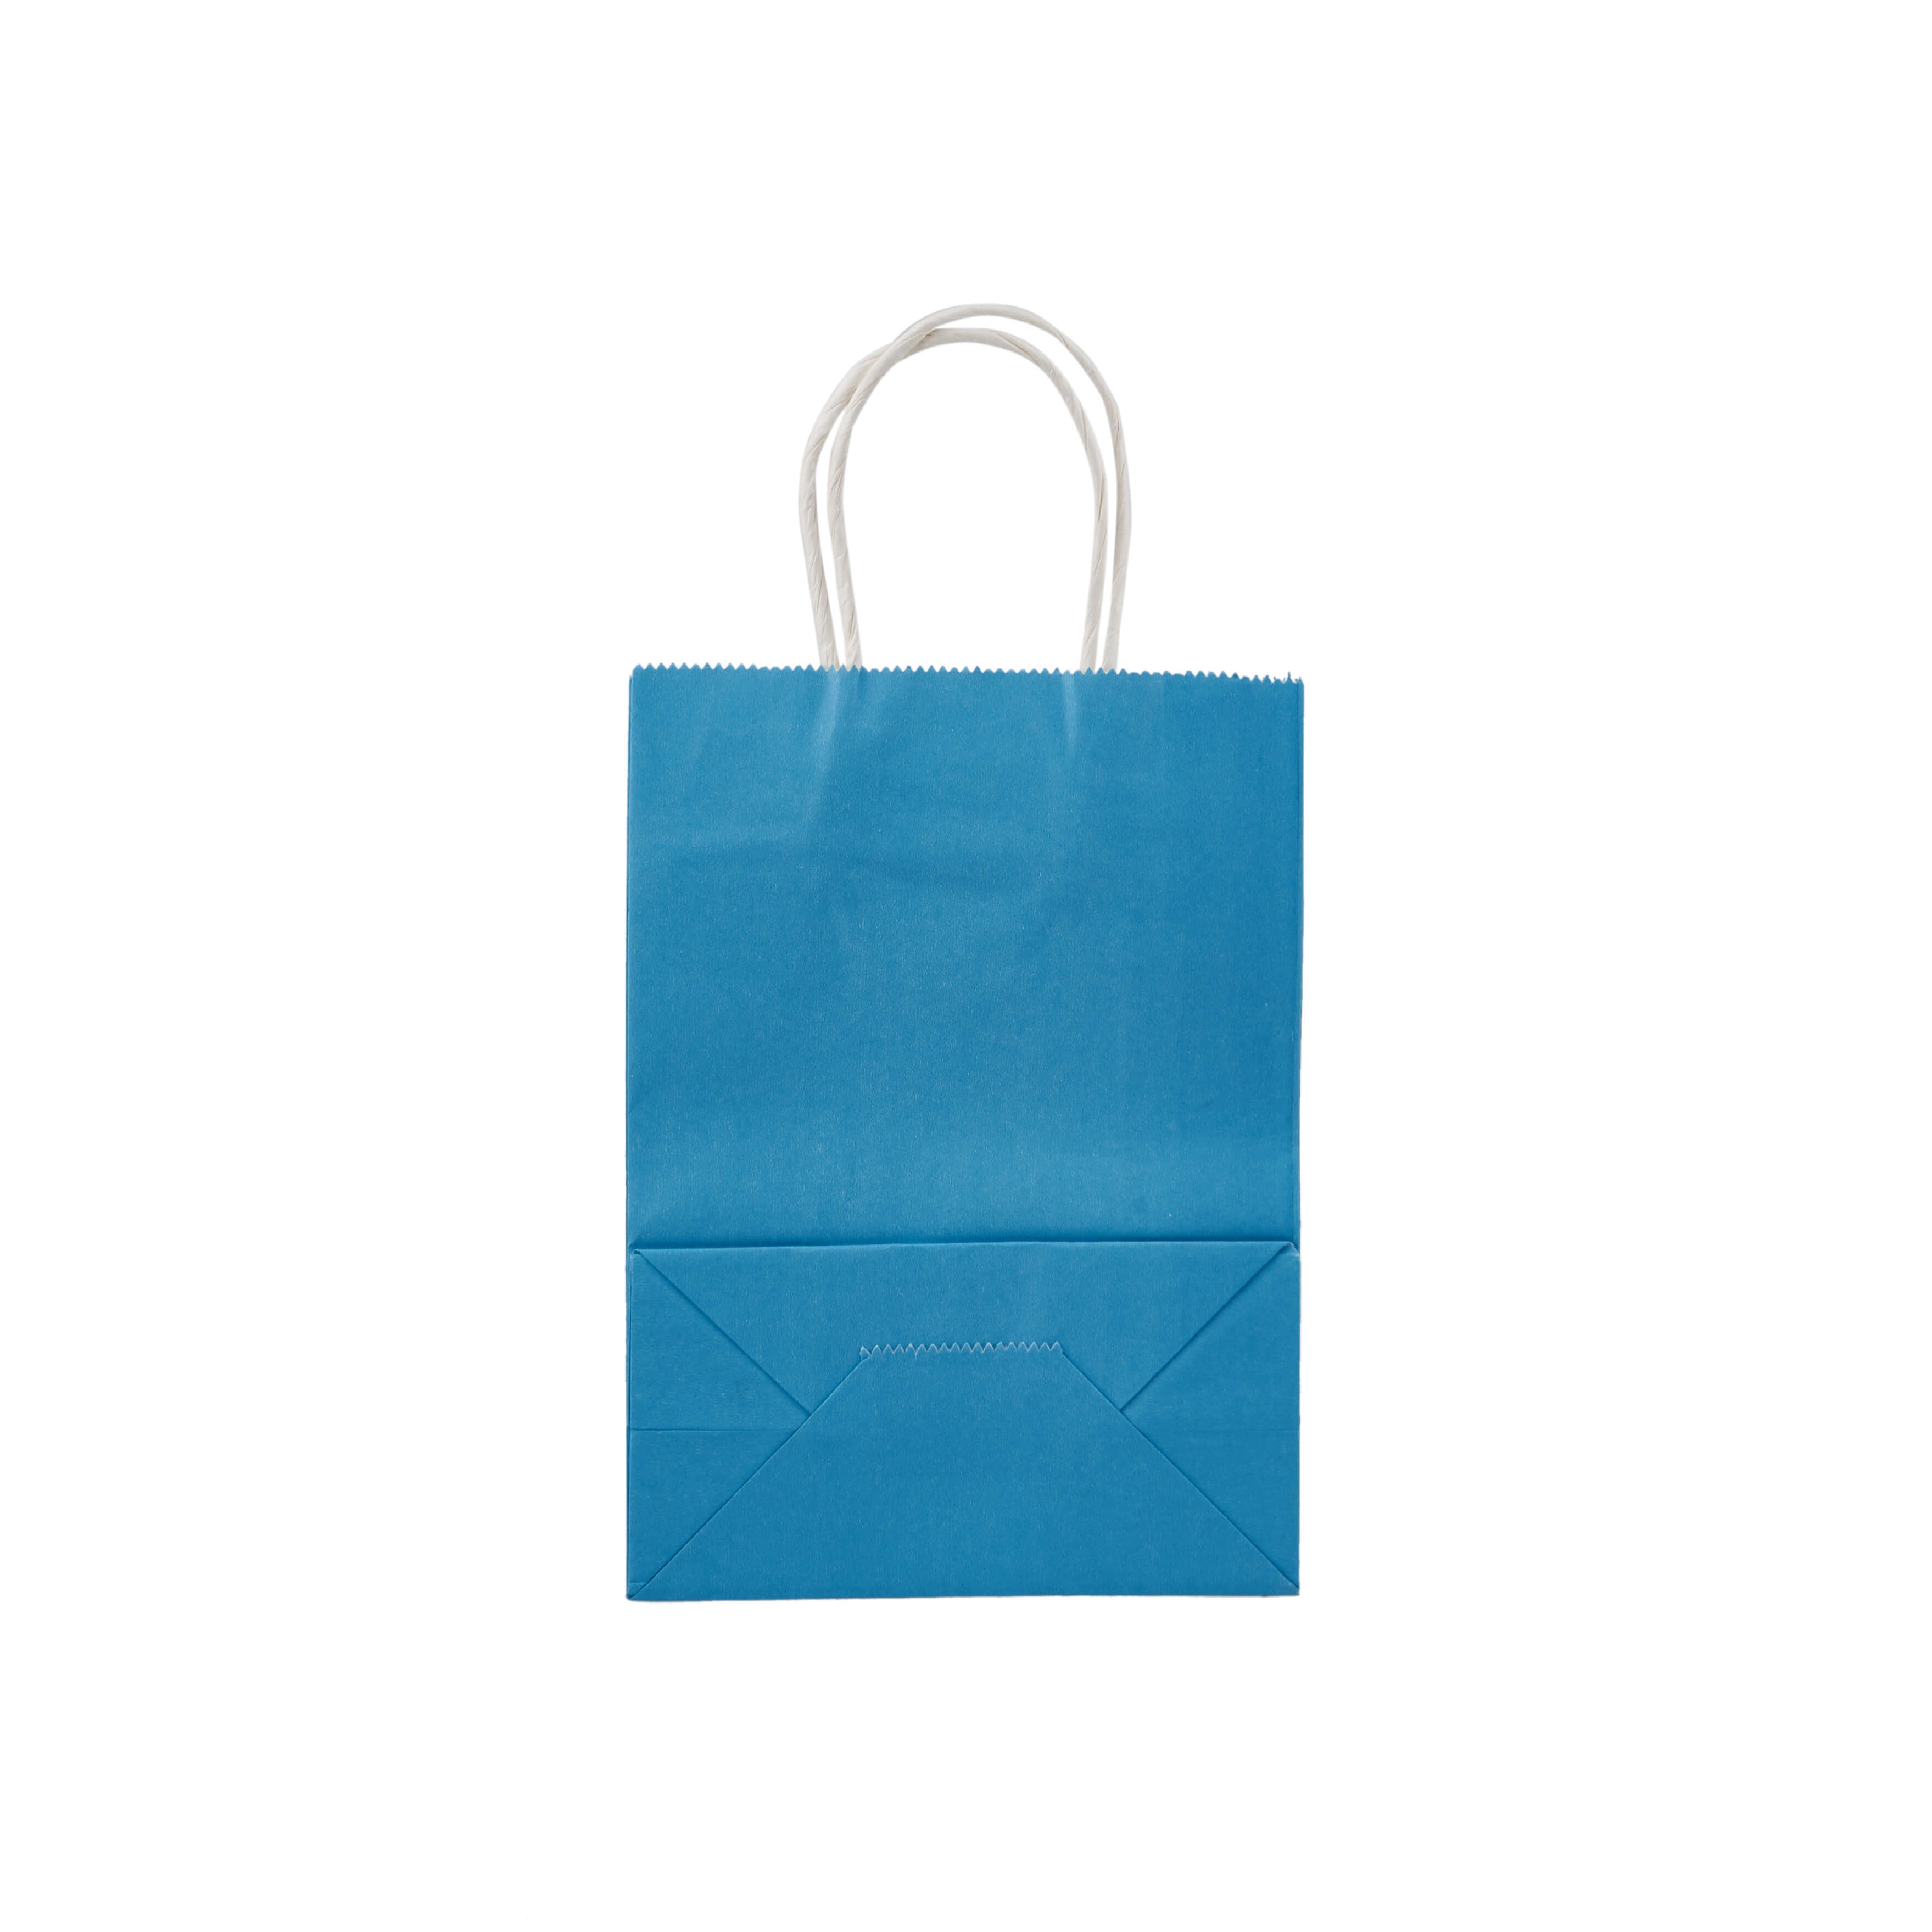 Gift Paper Bag Twisted Handle - hotpackwebstore.com